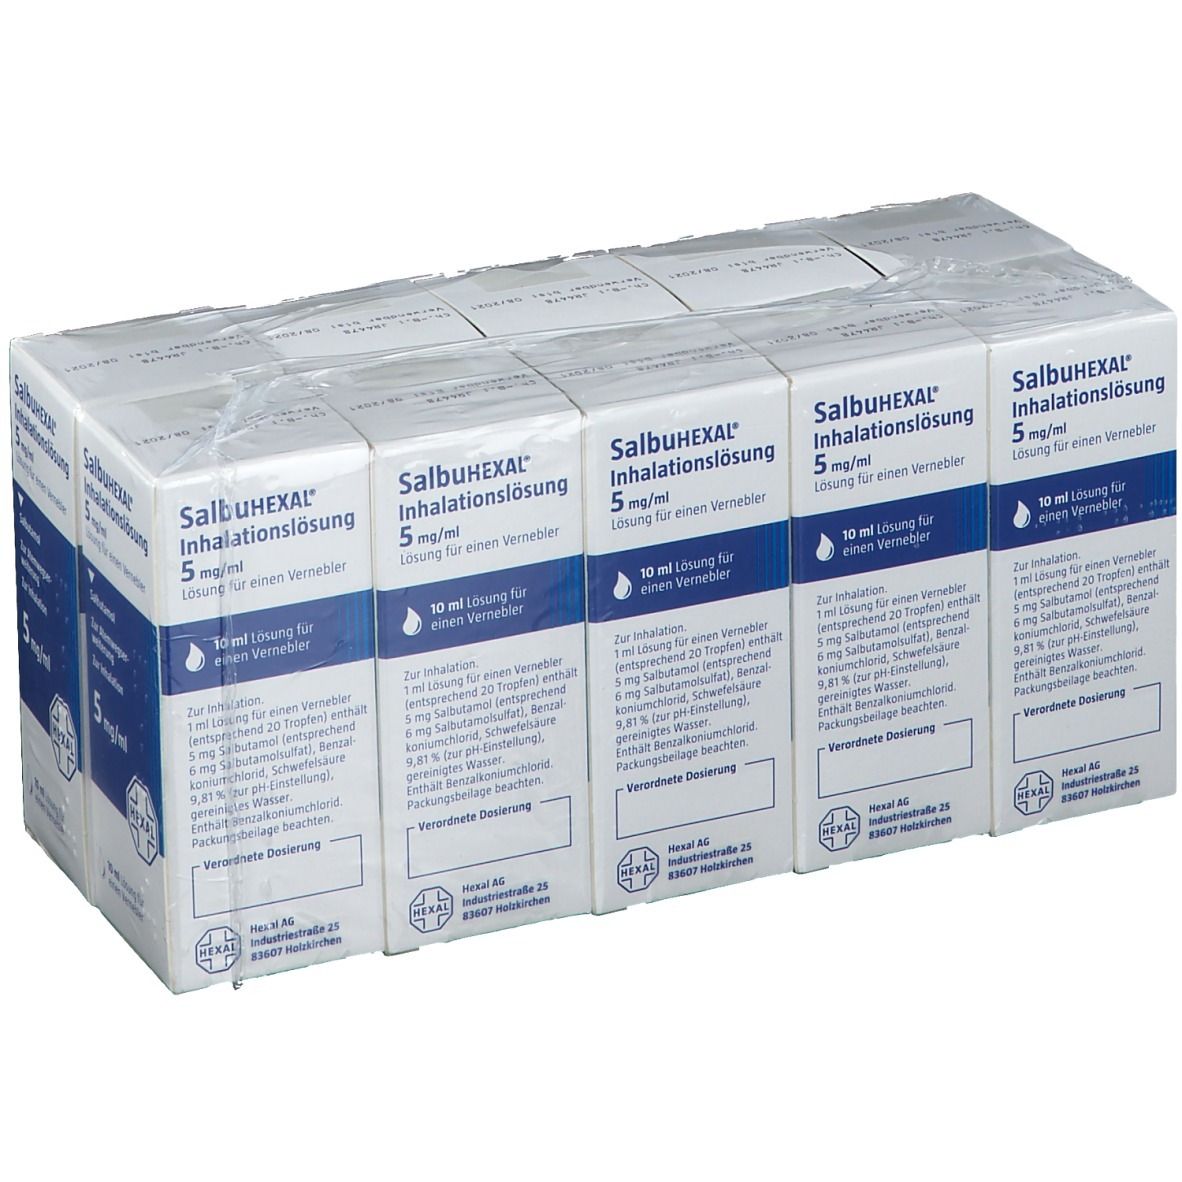 SalbuHEXAL® Inhalationslösung 5 mg/ml